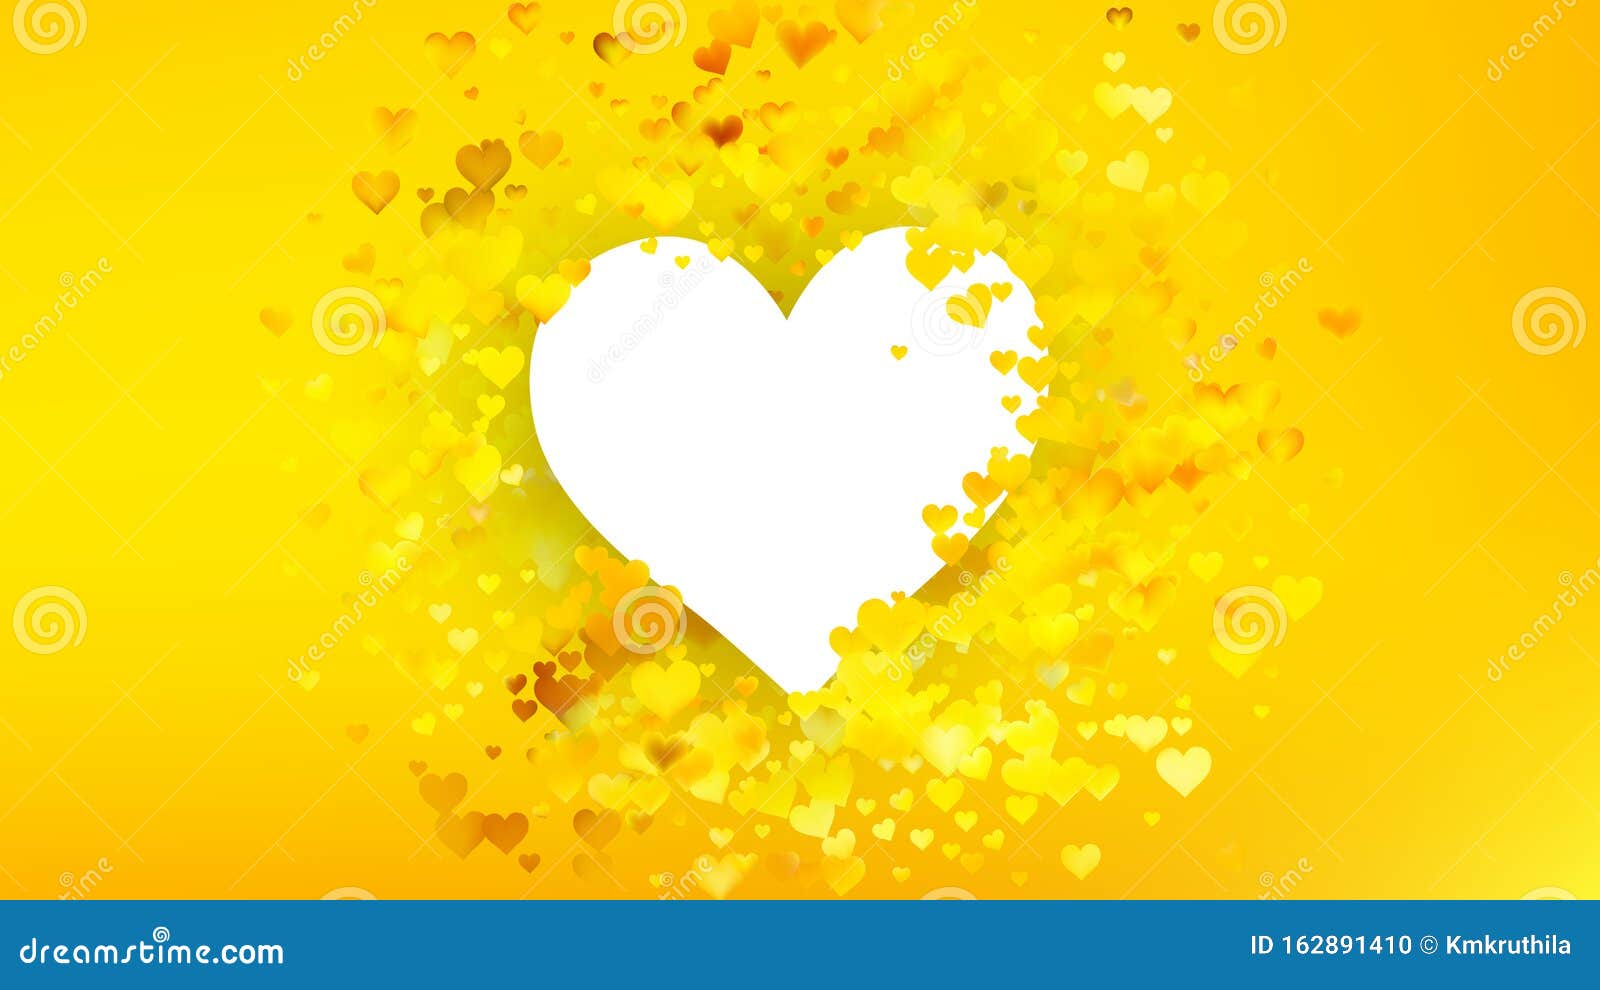 Yellow Heart Wallpaper Background Illustration Stock Vector - Illustration  of february, wedding: 162891410